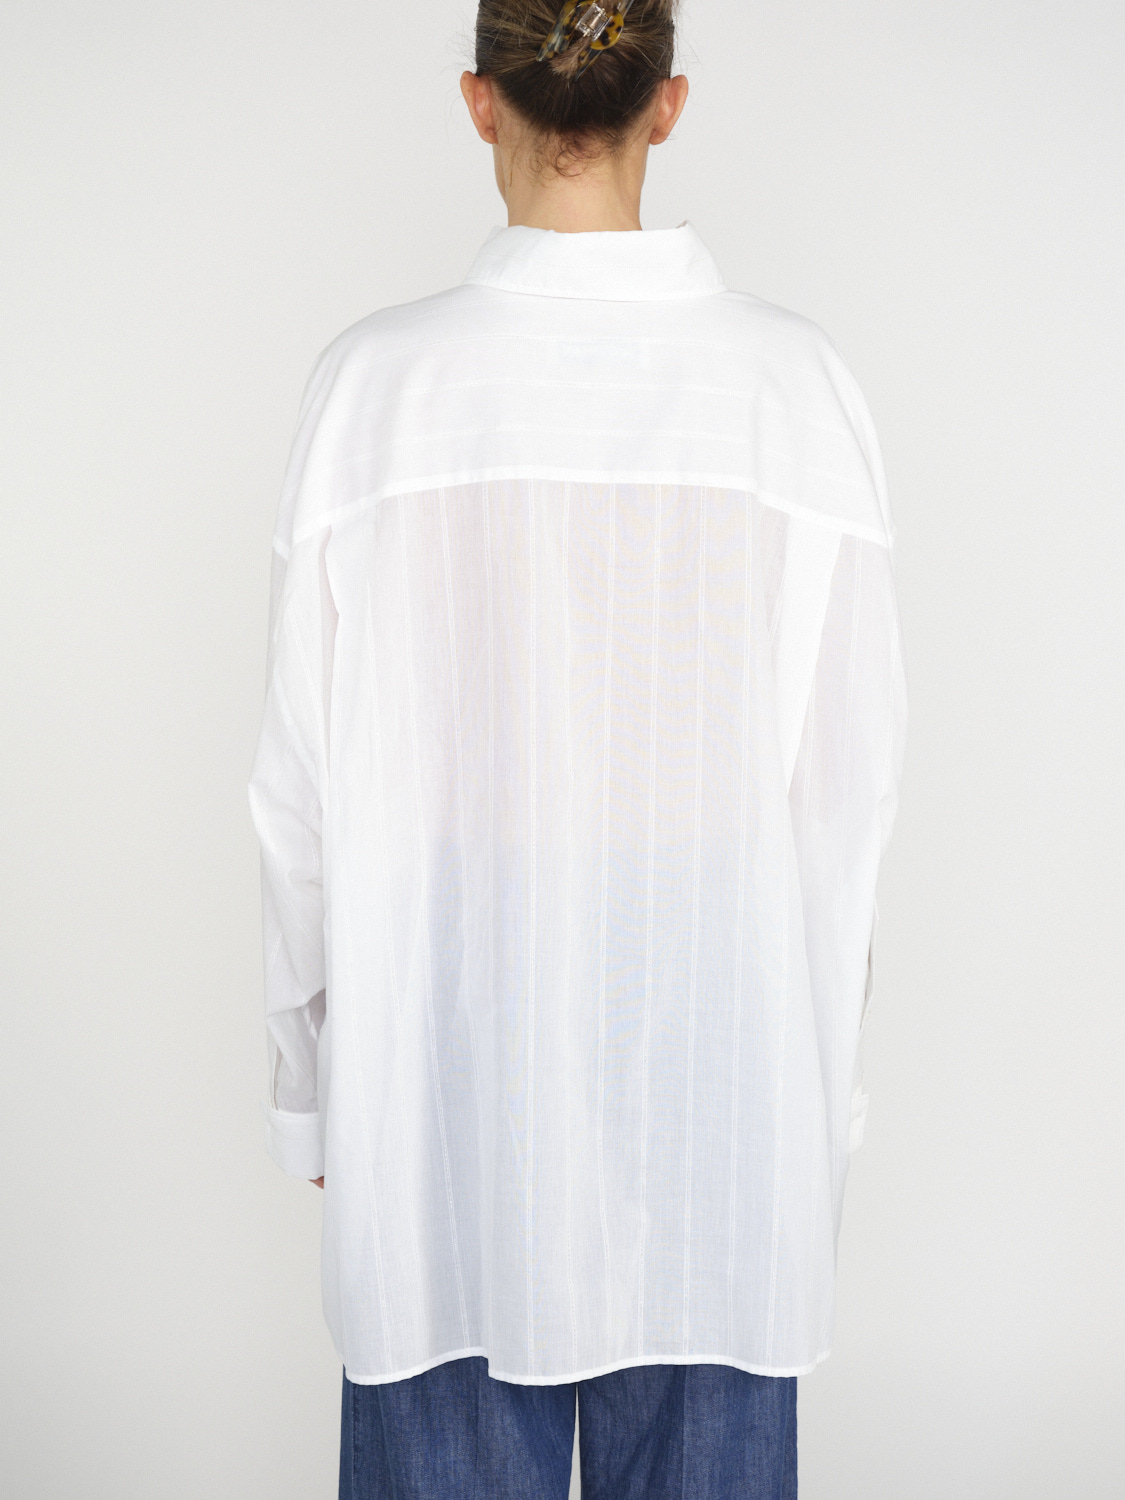 Darkpark Nathalie – Oversized Baumwoll-Hemd blanco S